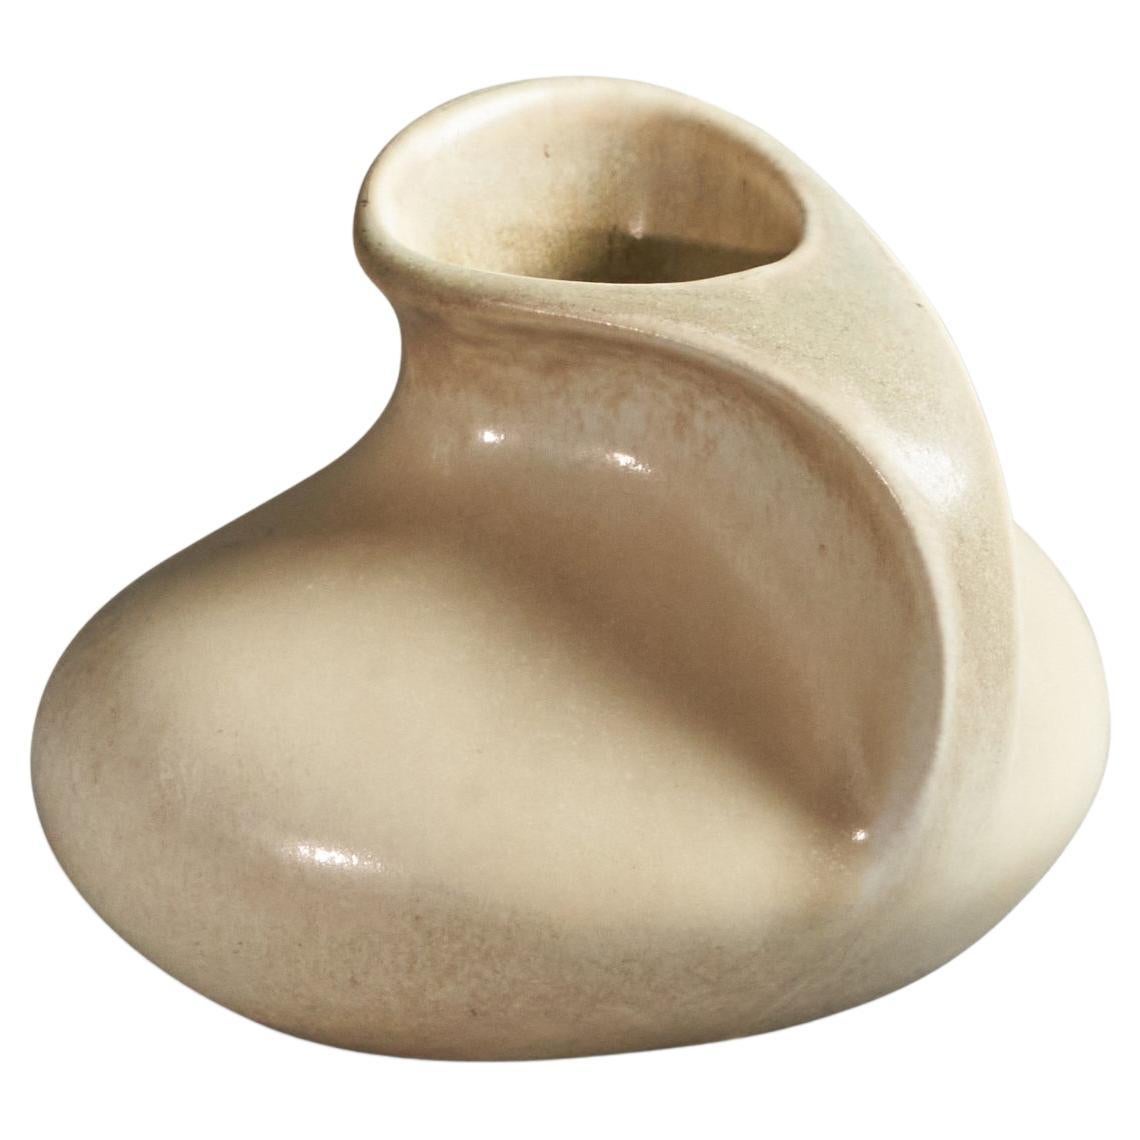 Lillemor Mannerheim, Small Vase, Porcelain, Sweden, 1950s